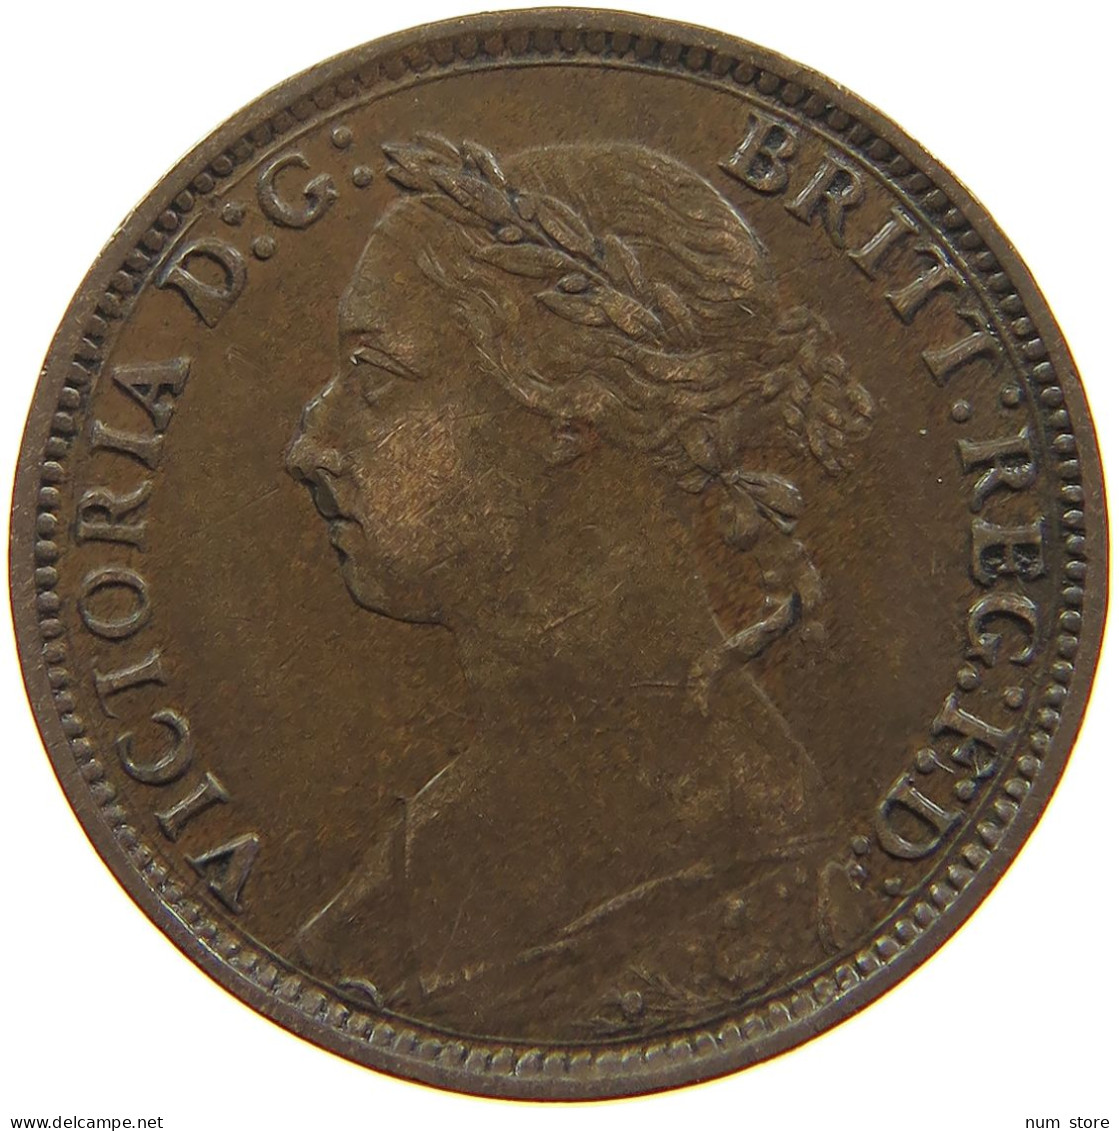 GREAT BRITAIN FARTHING 1886 Victoria 1837-1901 #t158 0137 - B. 1 Farthing